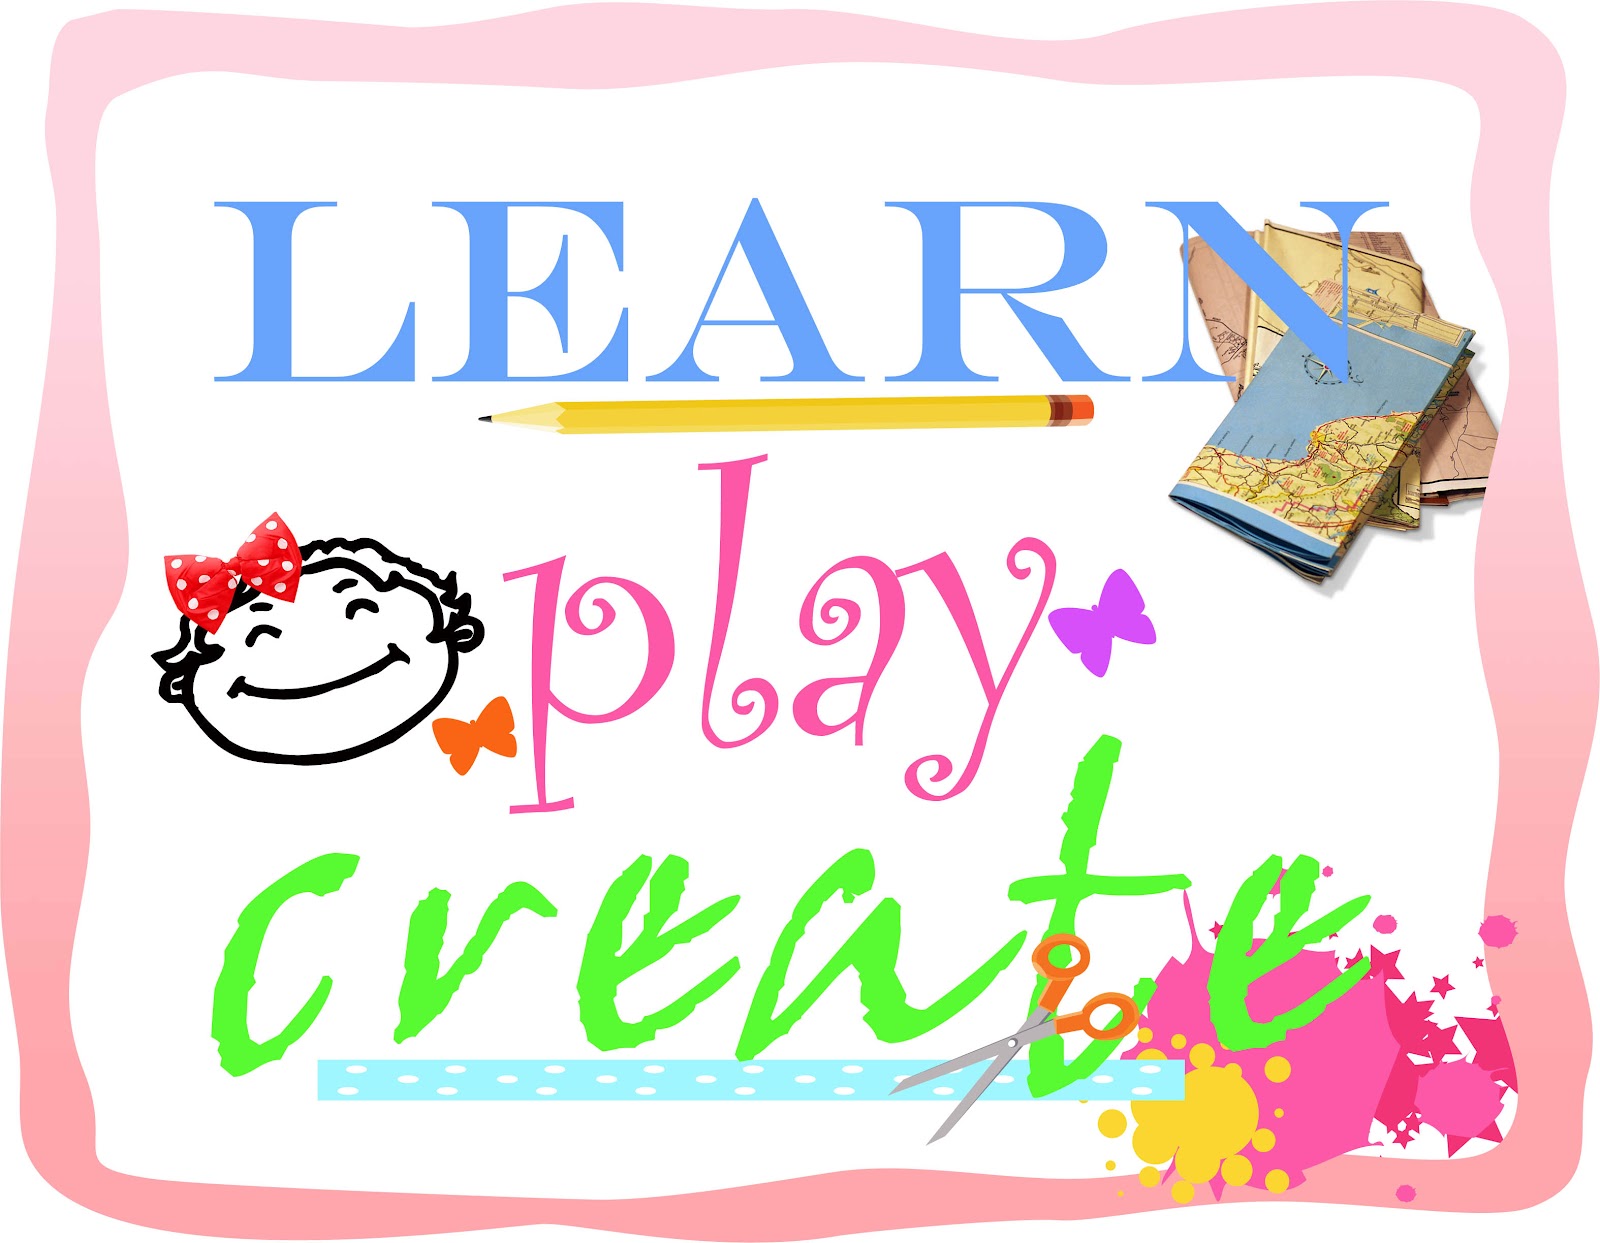 play learn clipart - photo #35